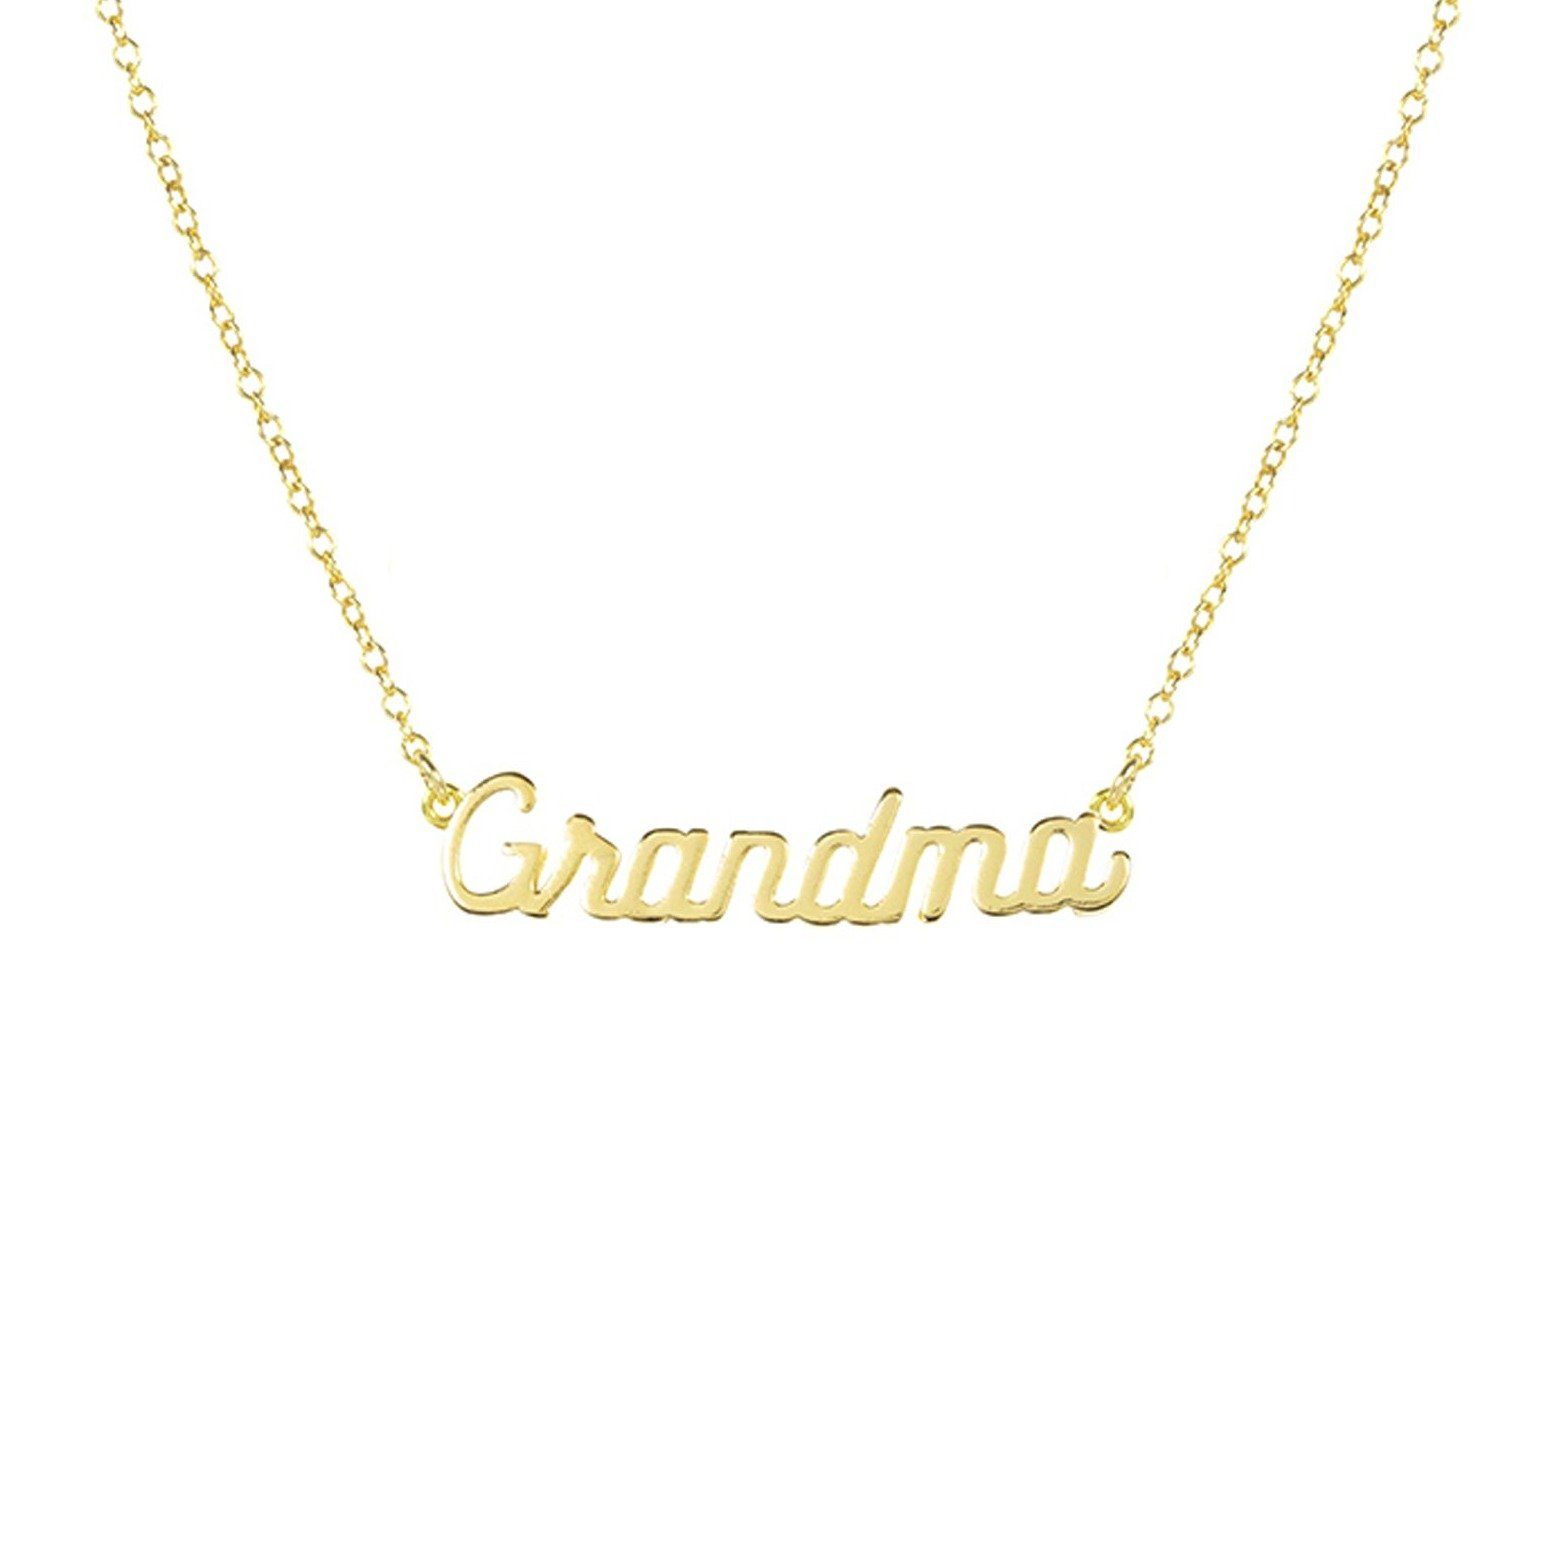 Dainty minimal gold Grandma Necklace handmade in America by Katie Dean Jewelry